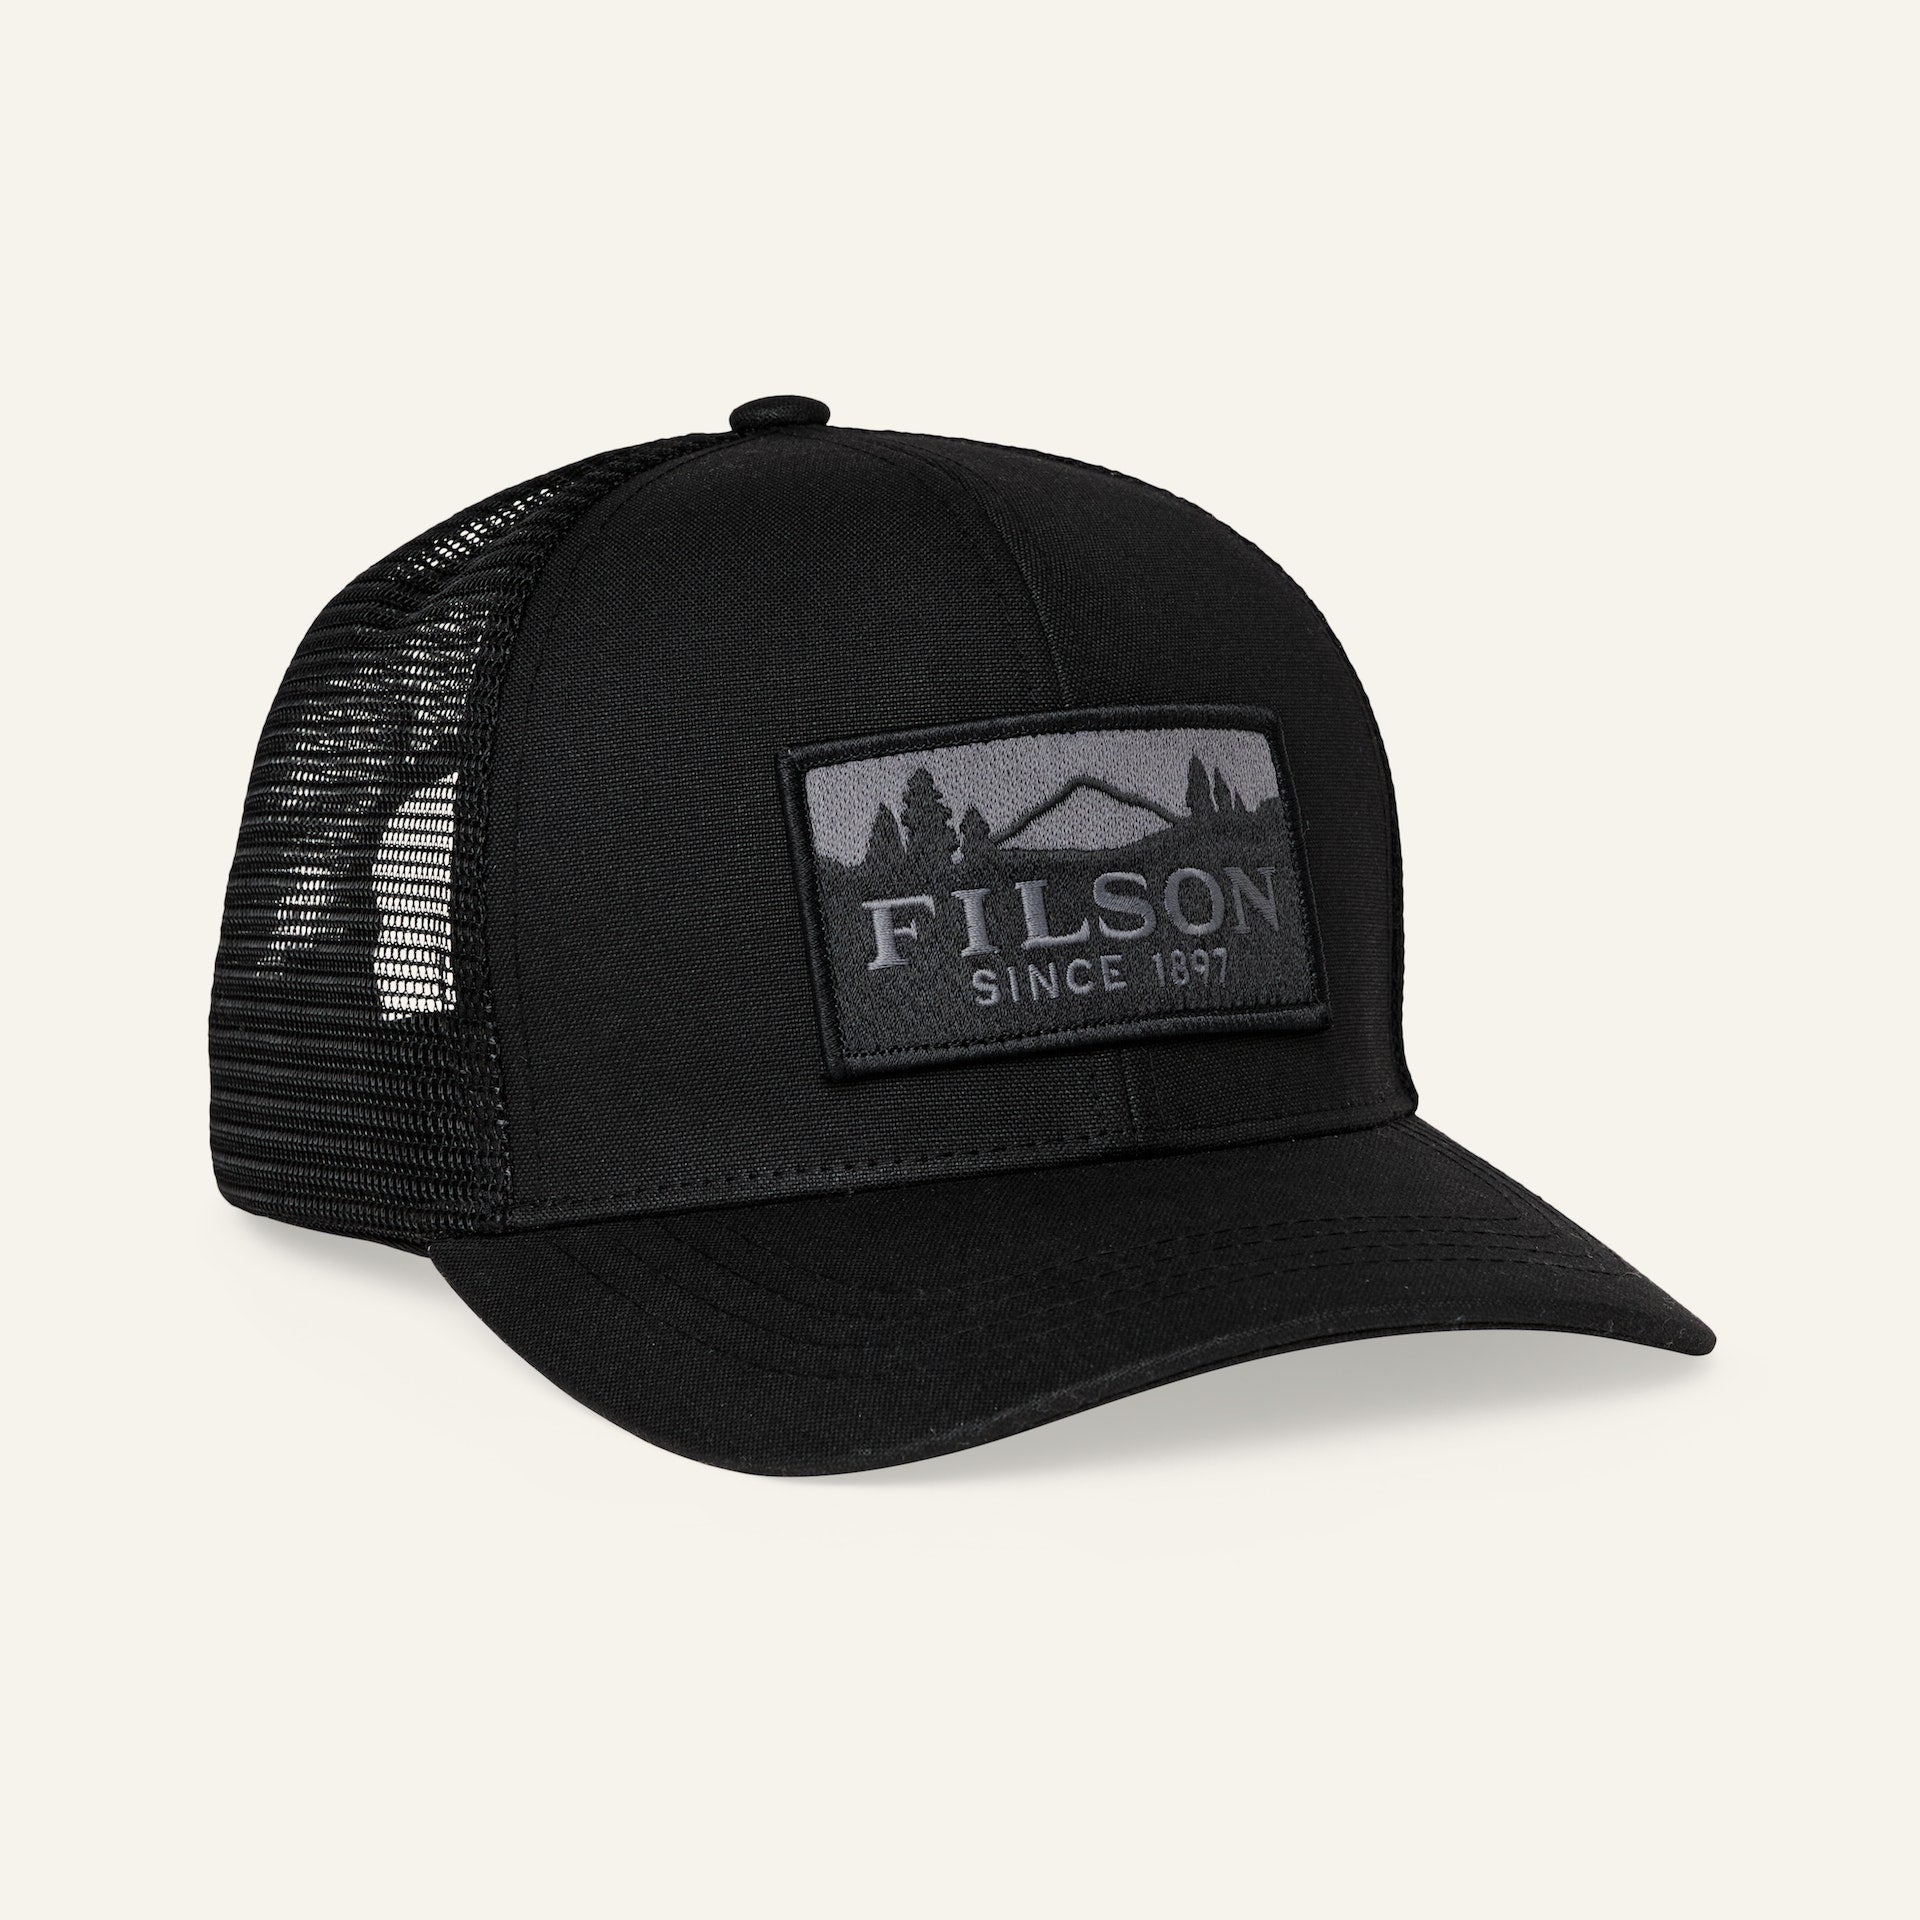 FILSON MESH LOGGER CAP - BLACK